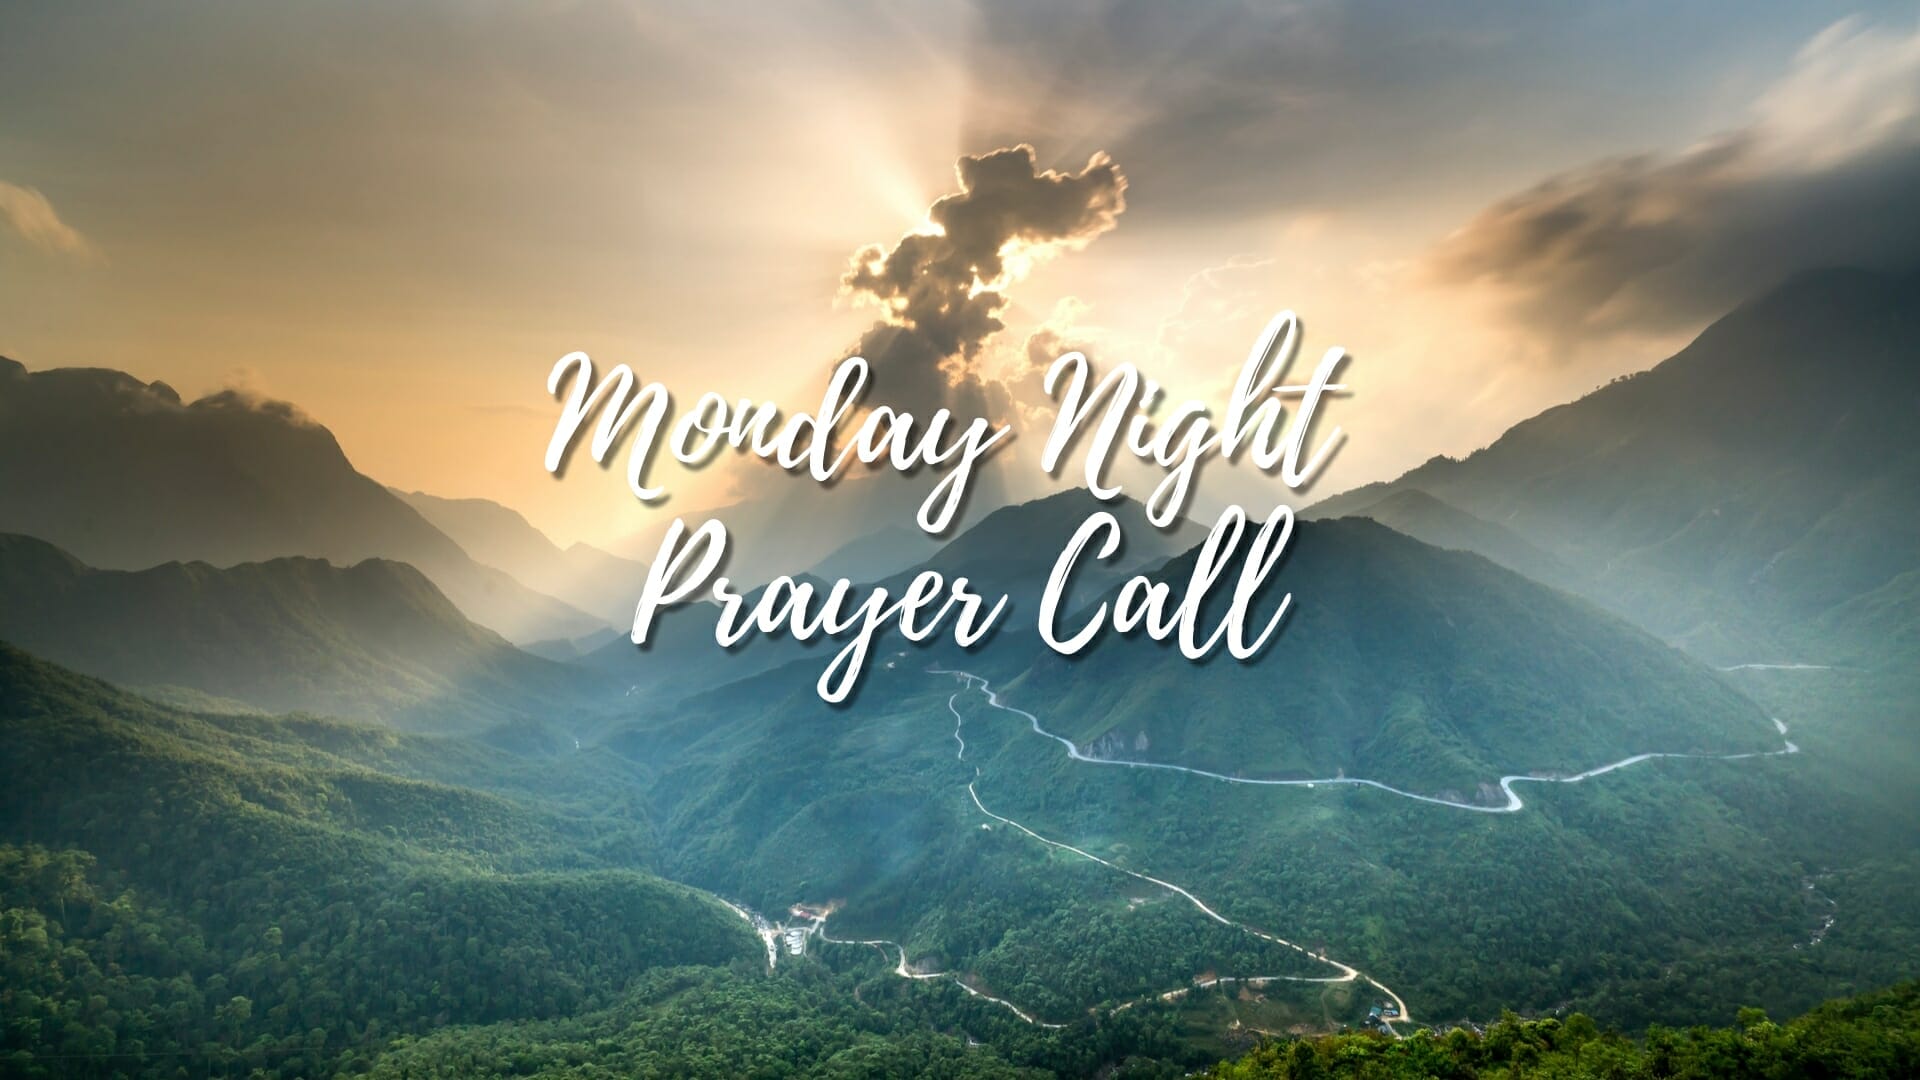 Monday Night Prayer Call